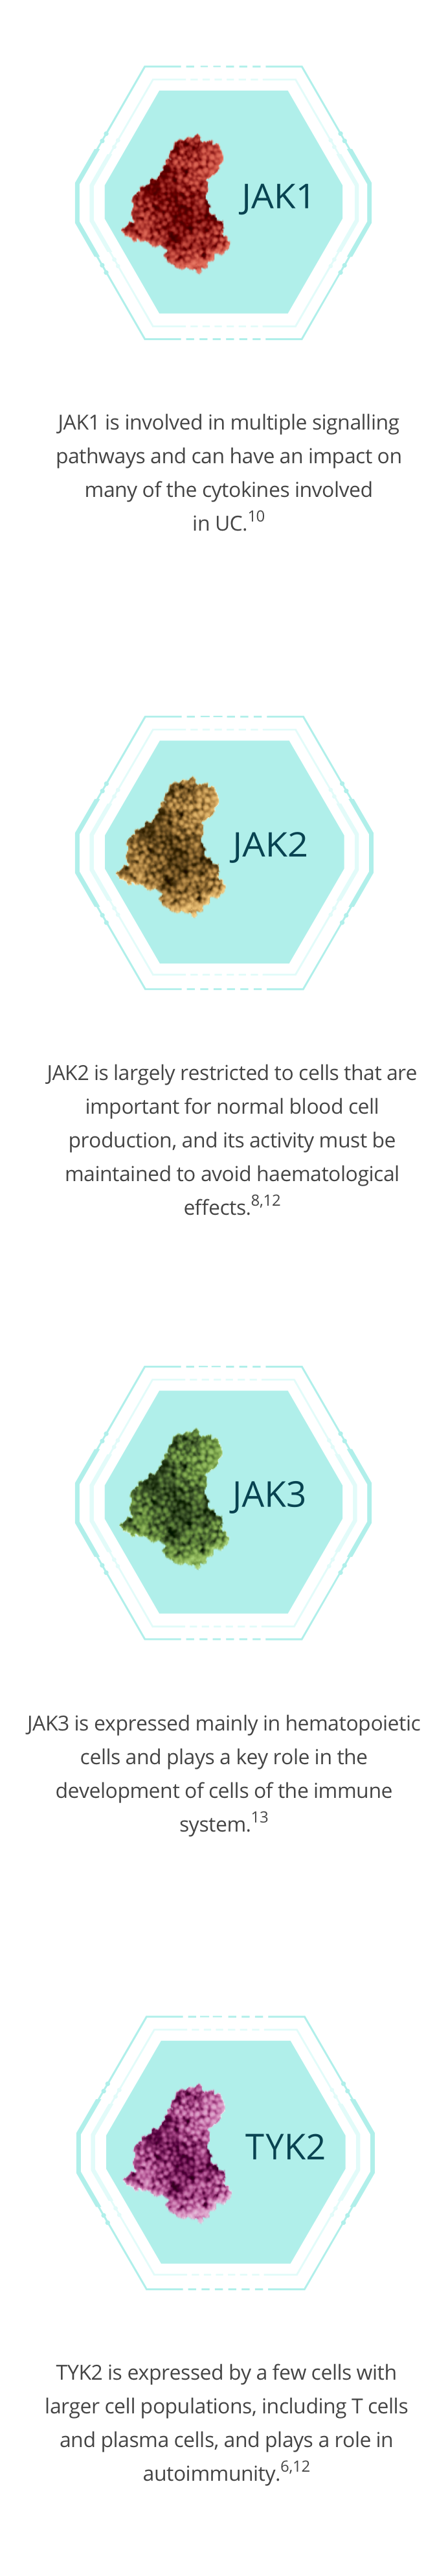 Regulation of the JAK-STAT pathway